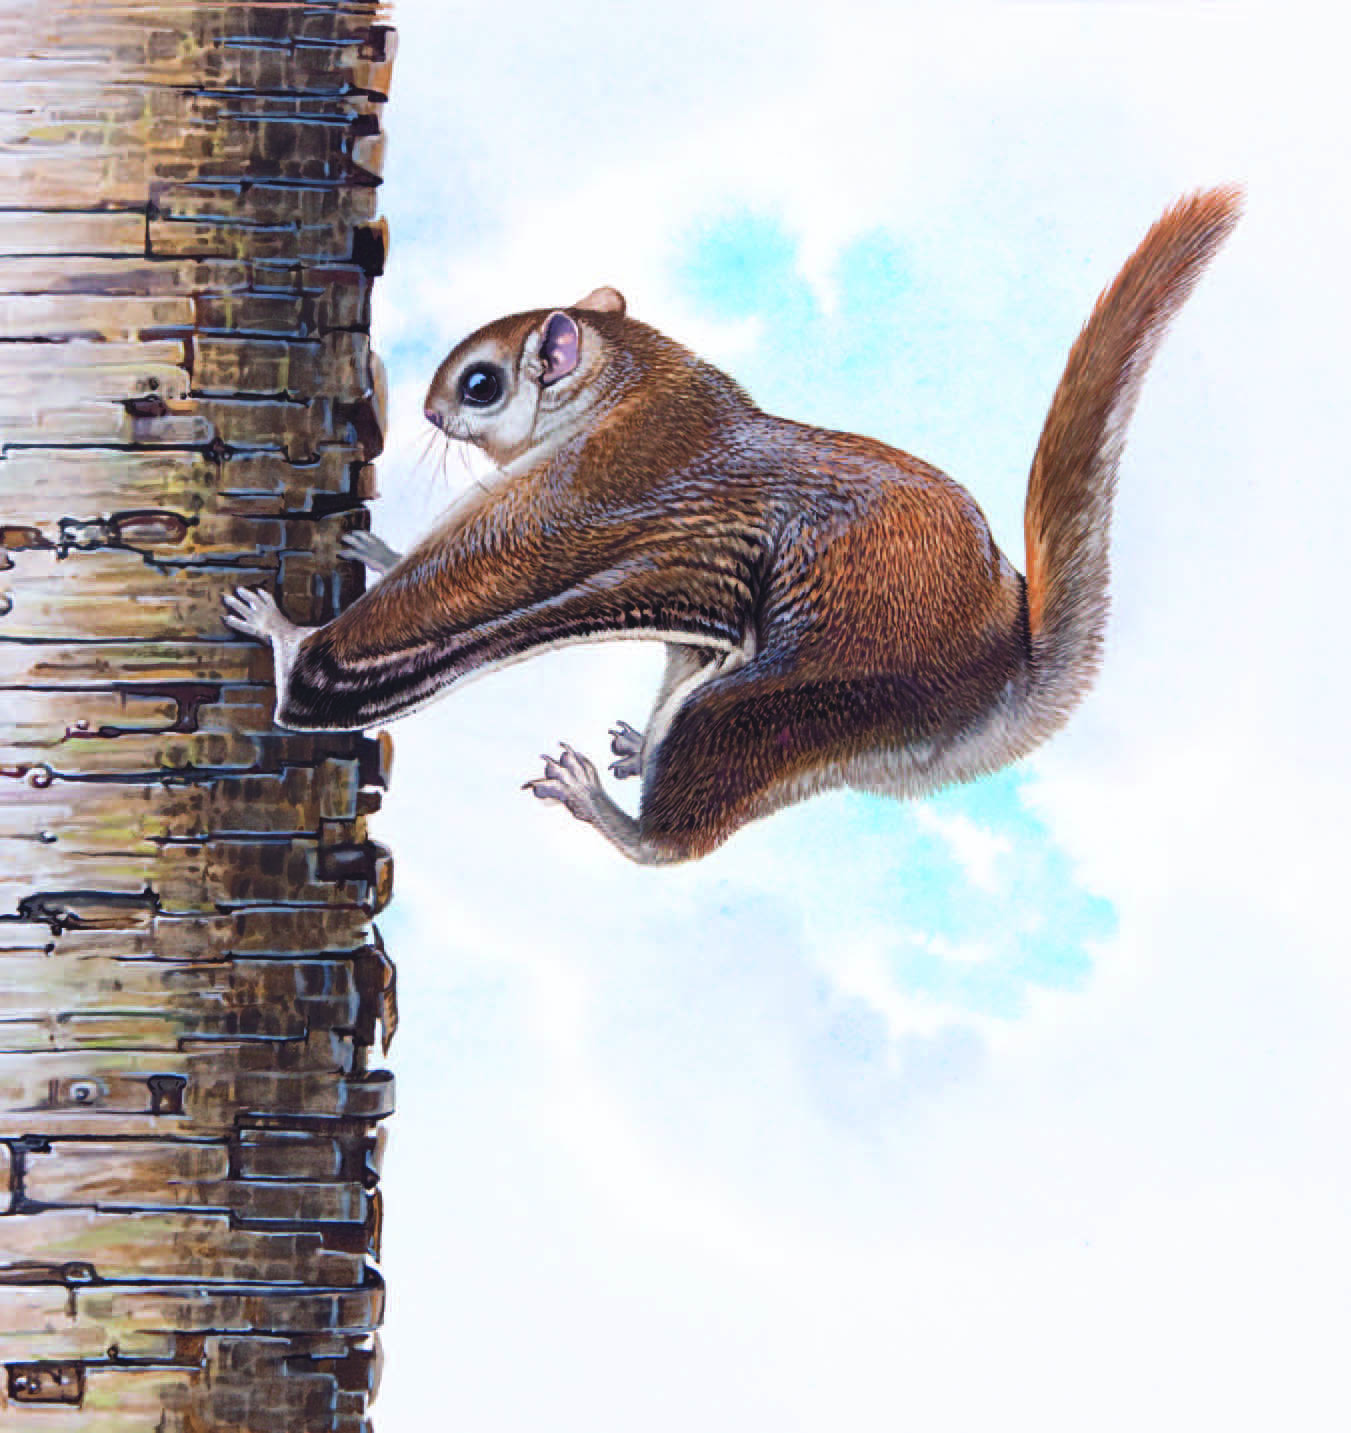 Northern Flying Squirrel / Glaucomys sabrinus